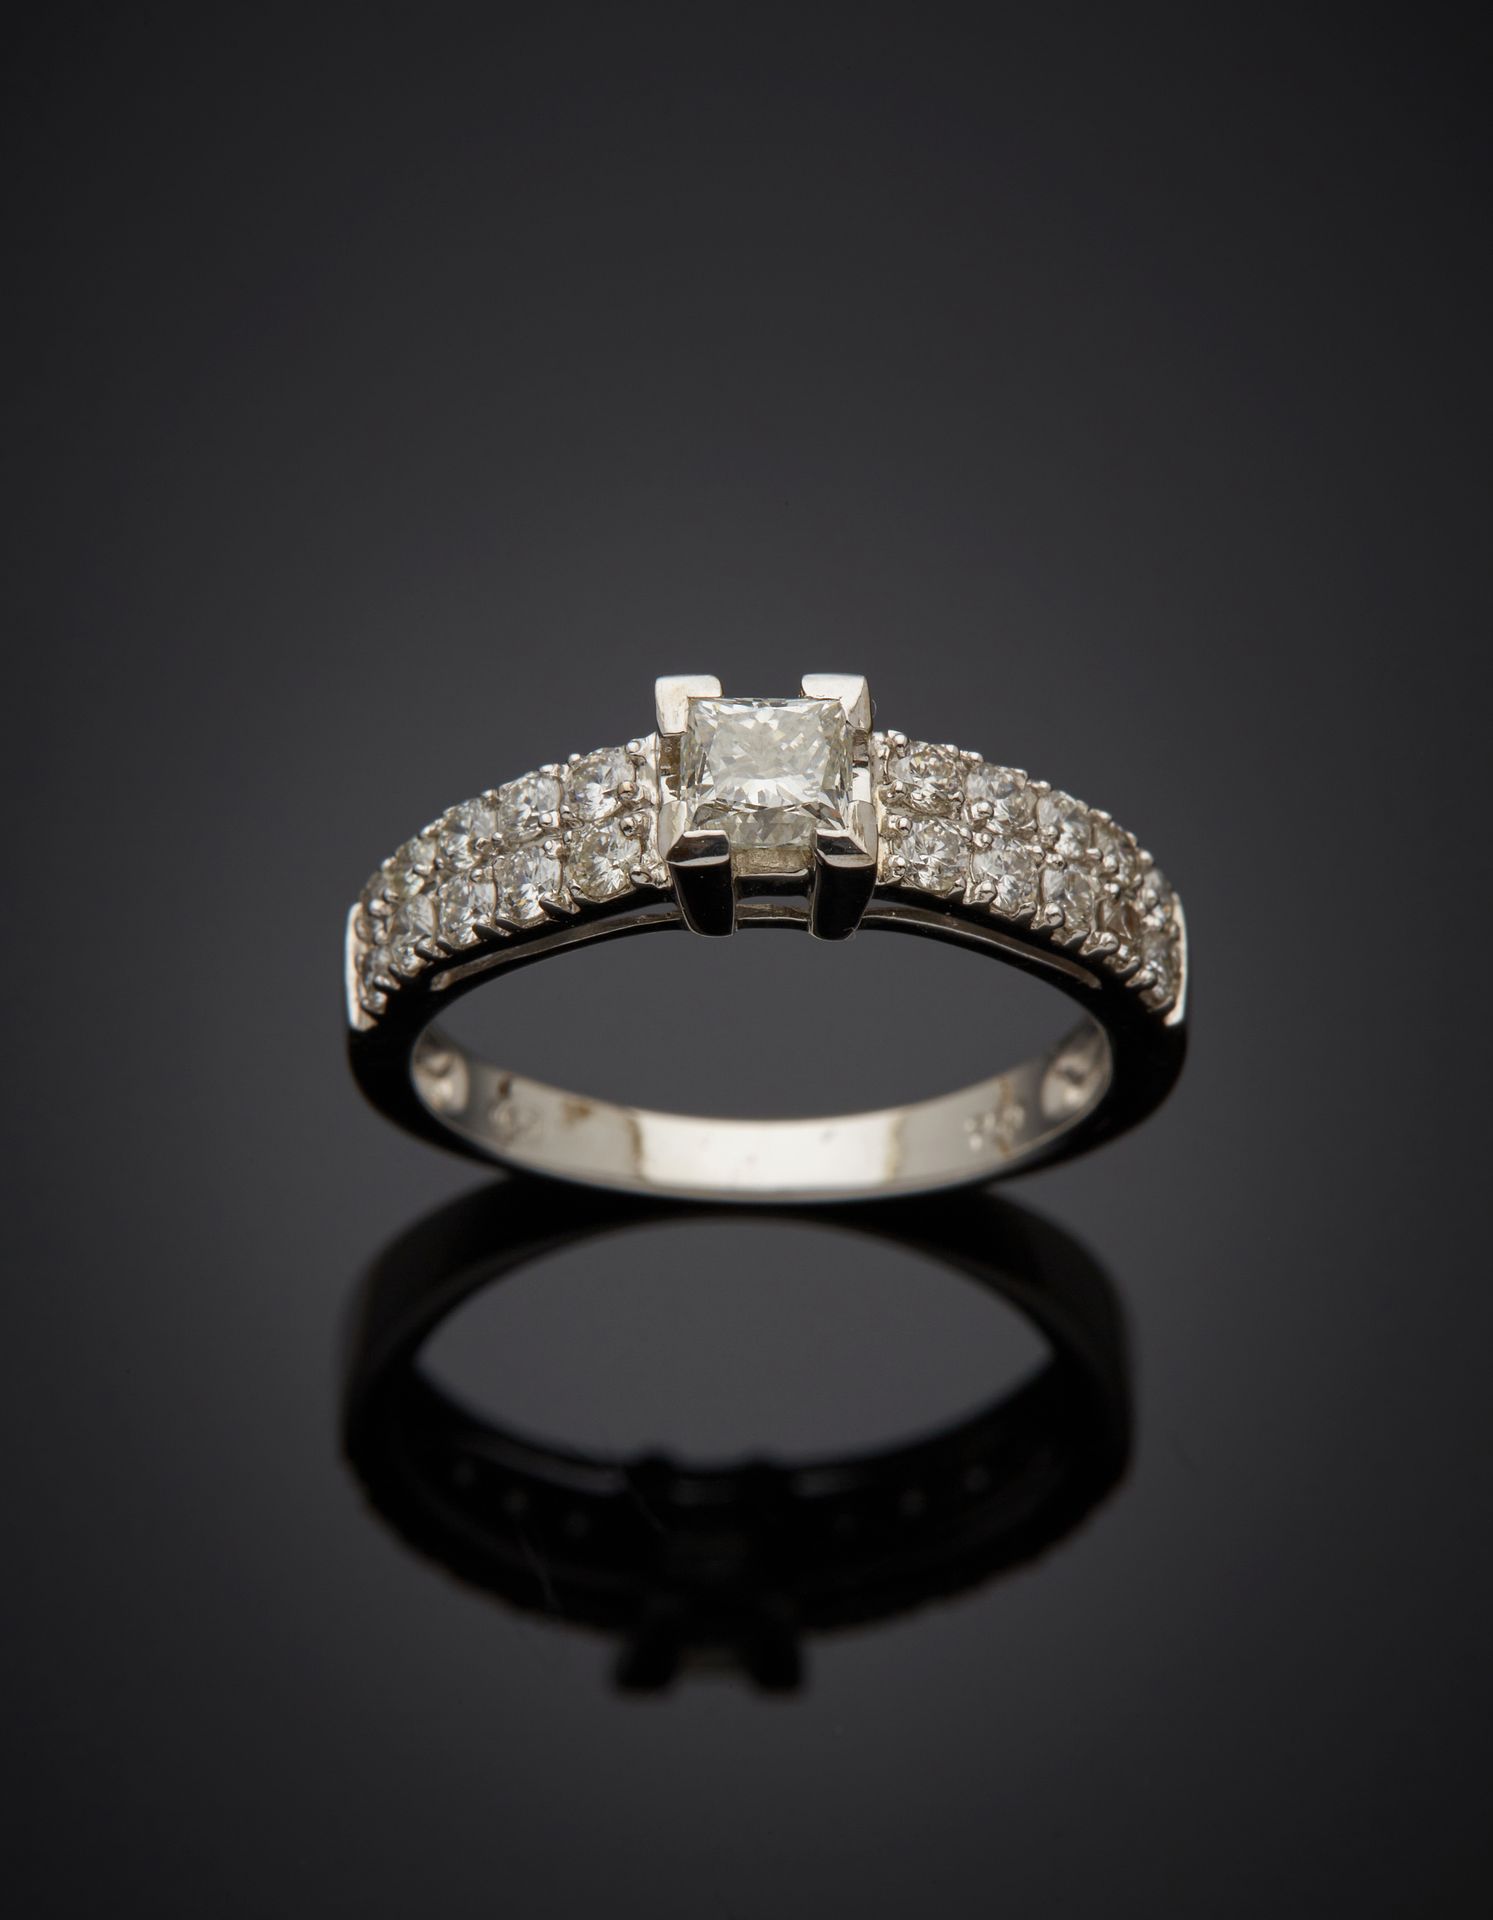 Null 一枚白金（750‰）戒指，镶嵌着一颗重约0.5克拉的公主式切割钻石，肩部是明亮式切割钻石的排列组合。
指头：54。总重量：3.5克。